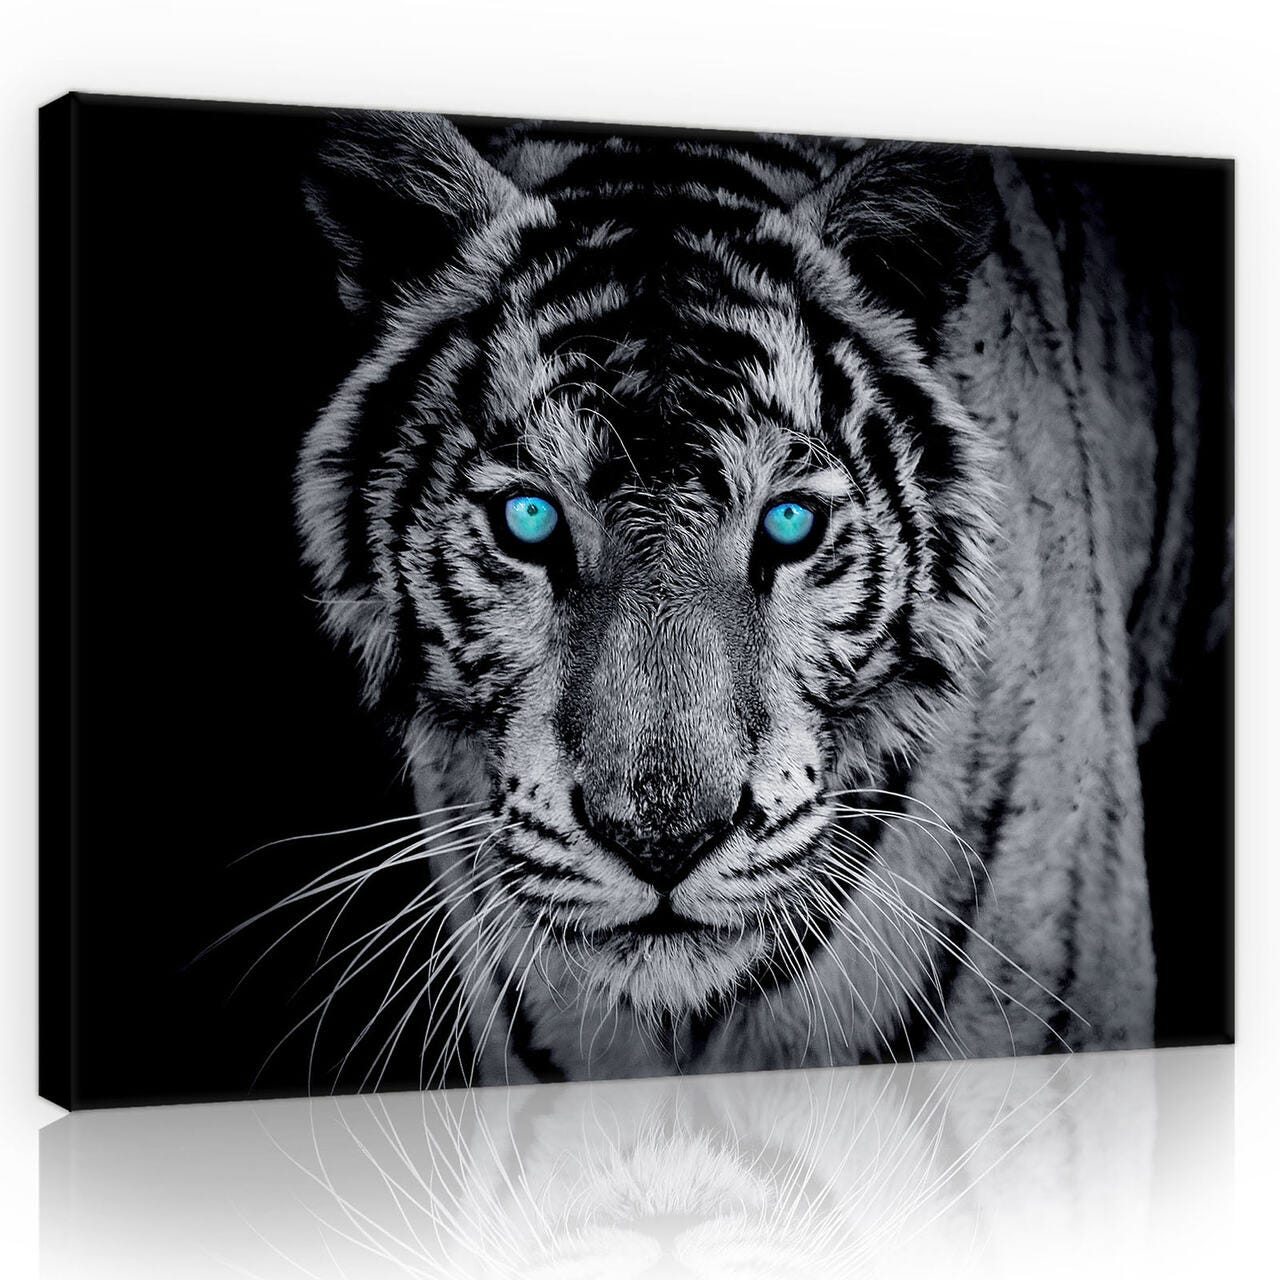 Impression sur Toile Tigre Animaux Nature Moderne 80x60 cm XXL